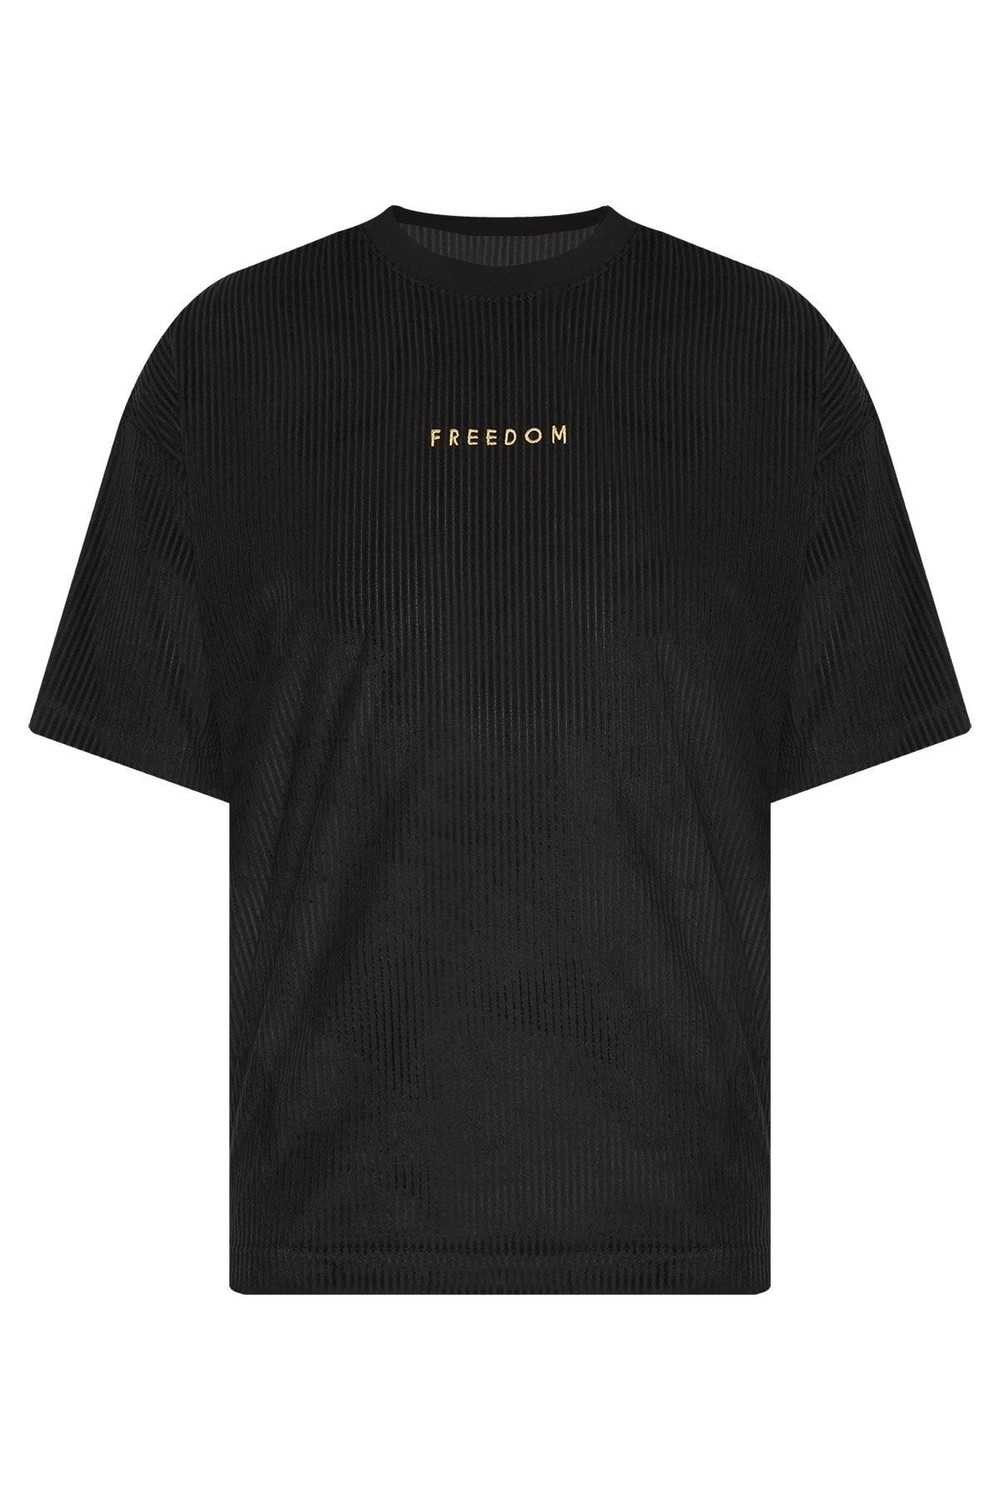 XHAN Black Freedom Embroidered Corduroy Oversized T-shirt 2x4-2-45986-02